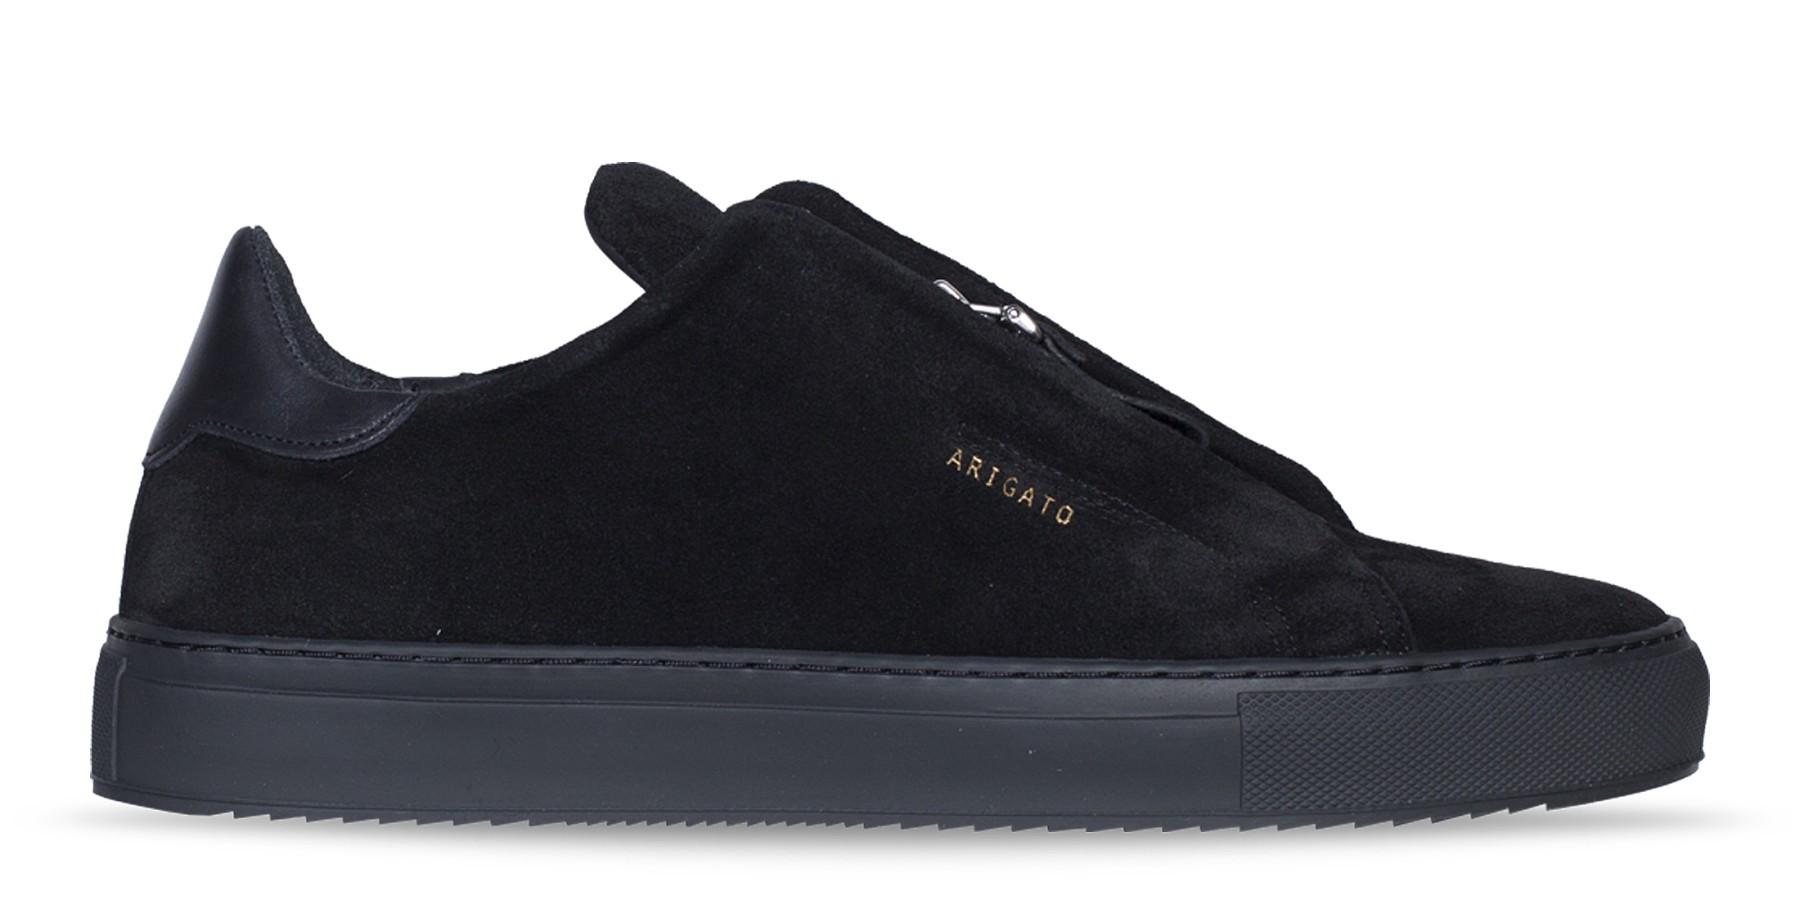 clean 90 sneaker black leather